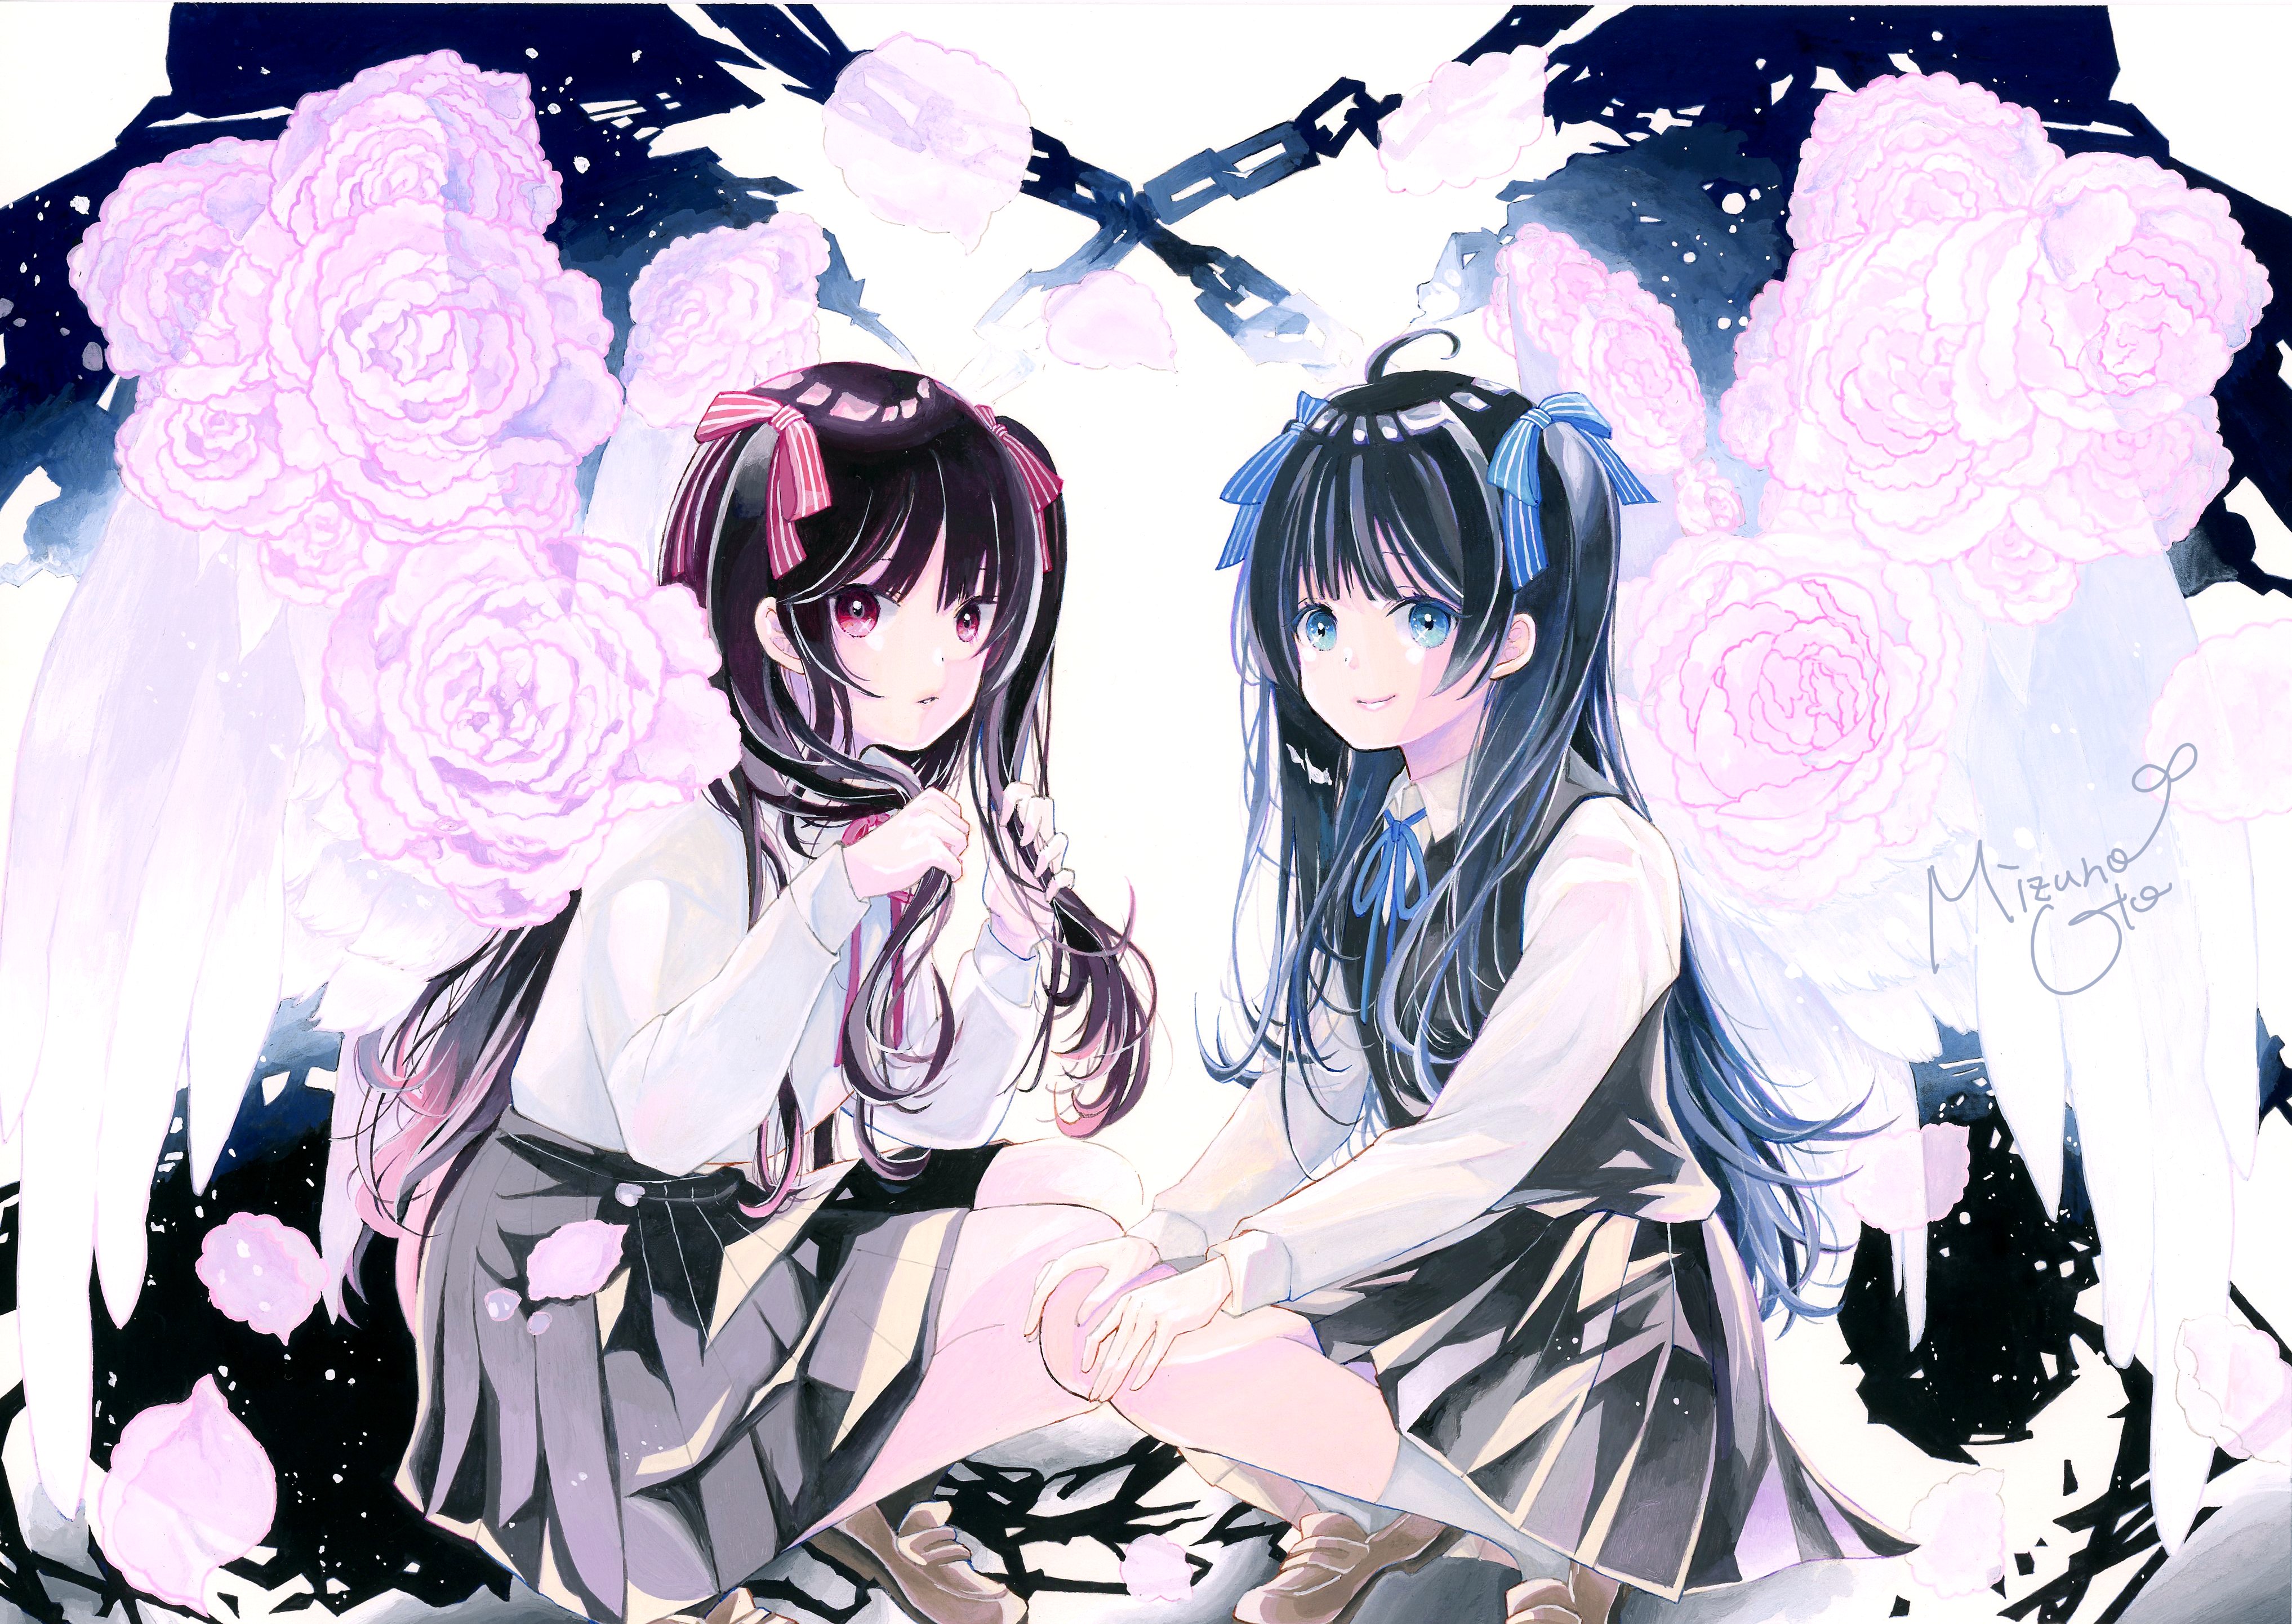 Twin sister anime by Idaoki on DeviantArt